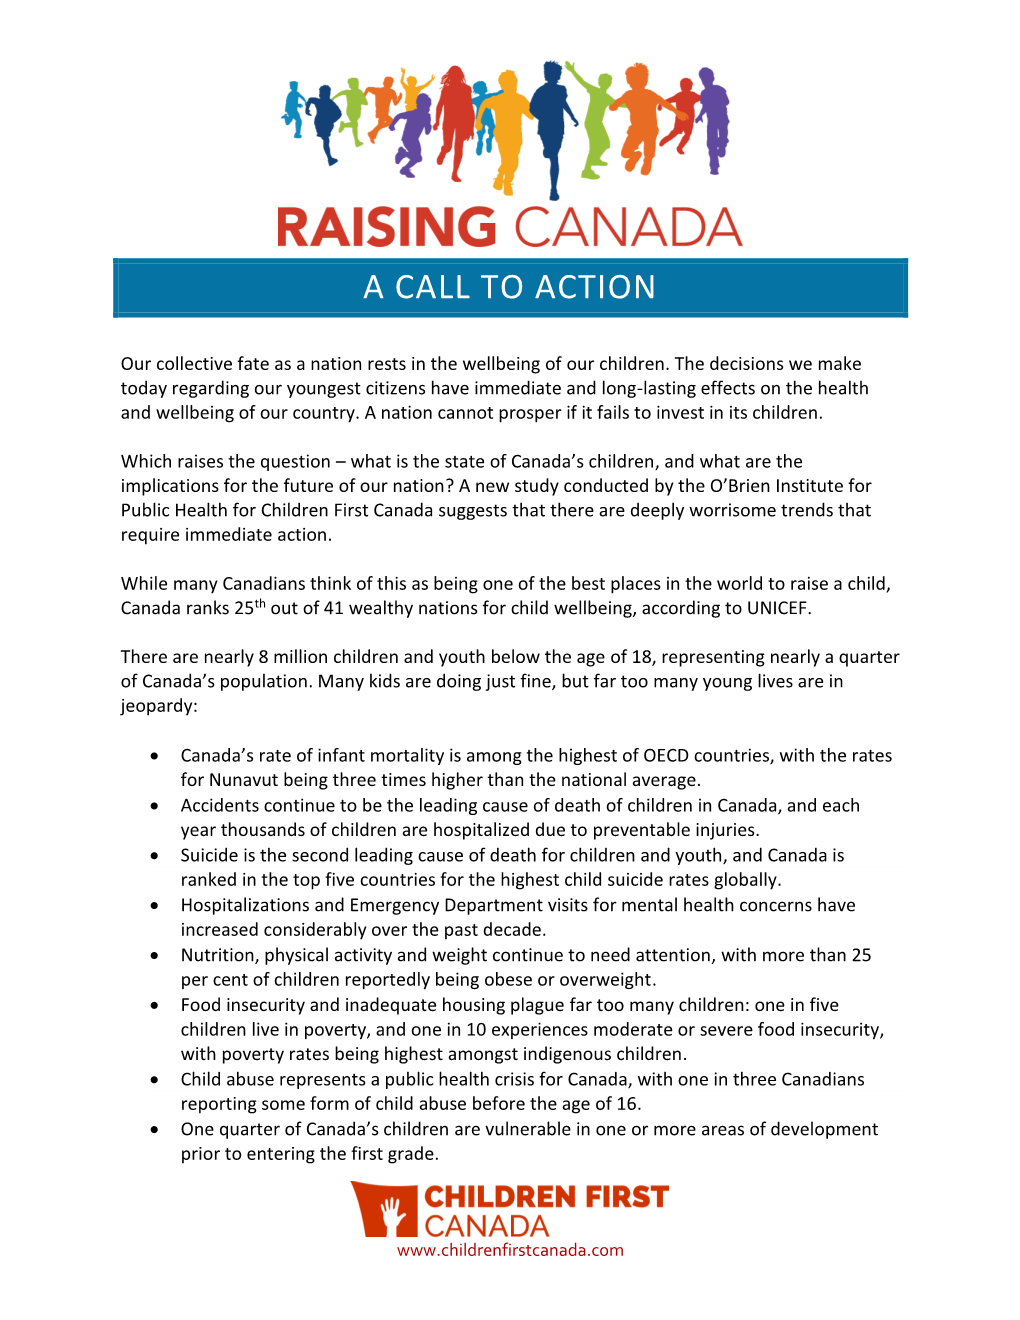 Raising Canada: a Call to Action